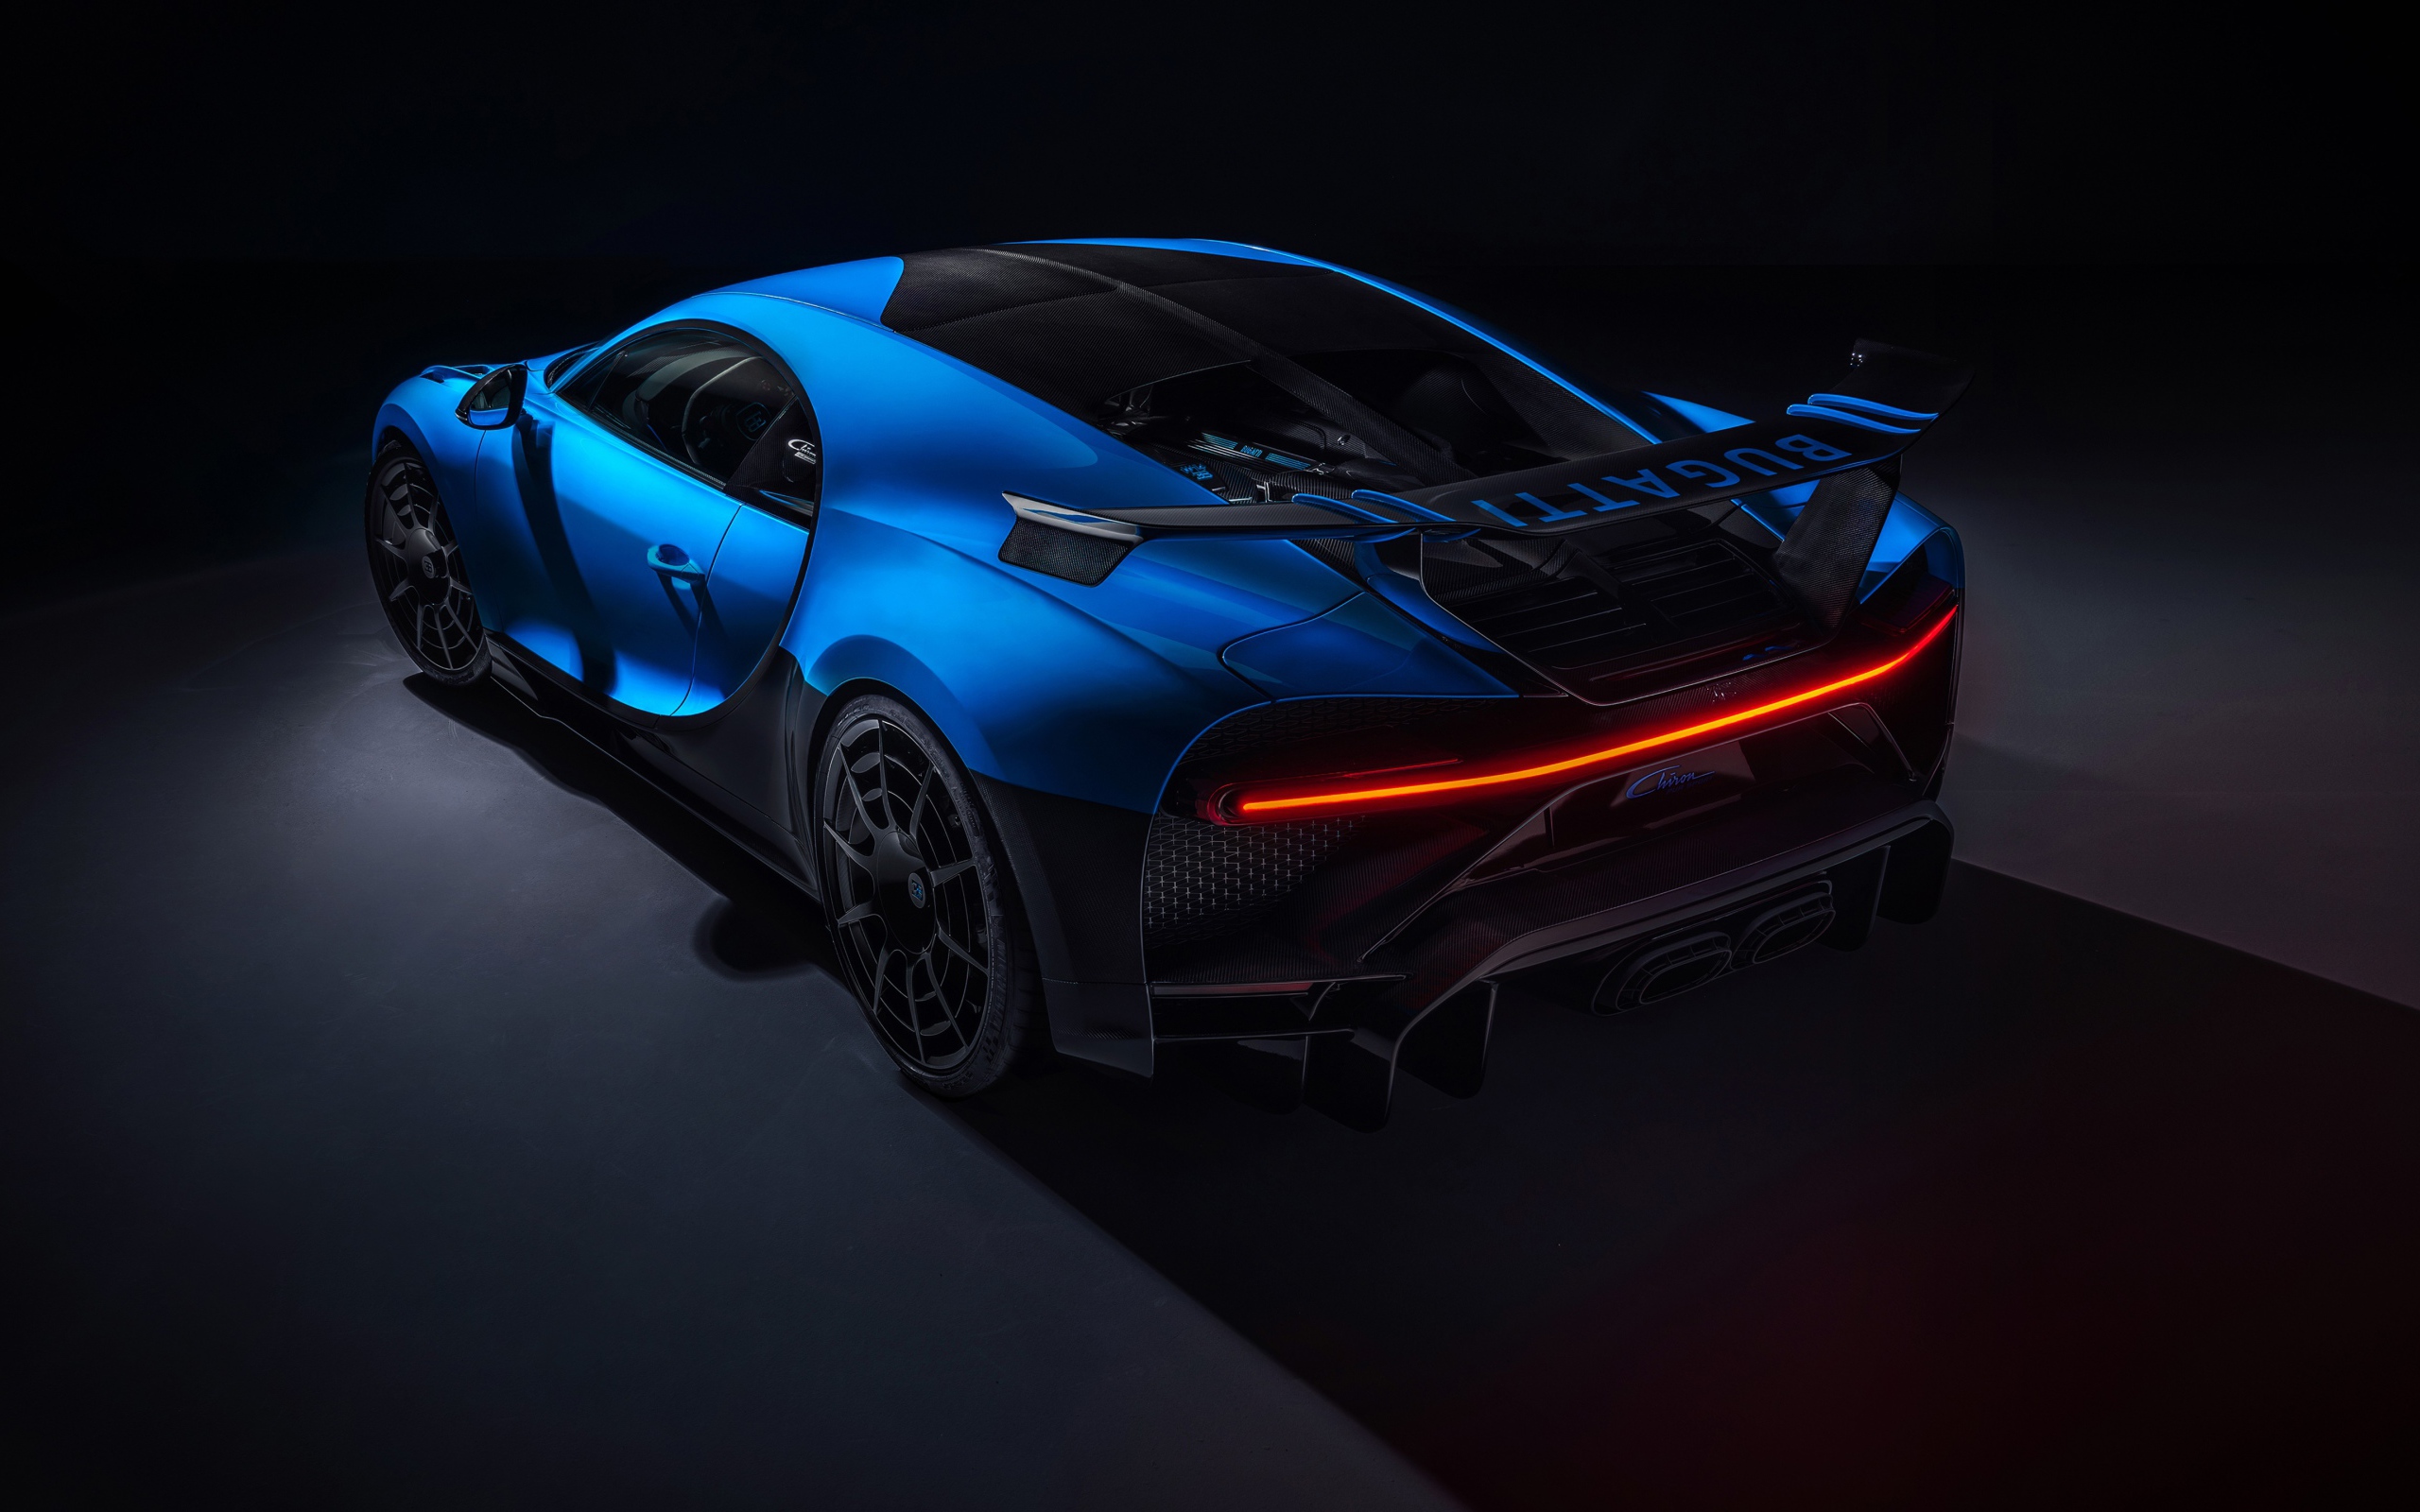 Синий автомобиль Bugatti Chiron Pur Sport 2020 года вид сзади на черном фоне